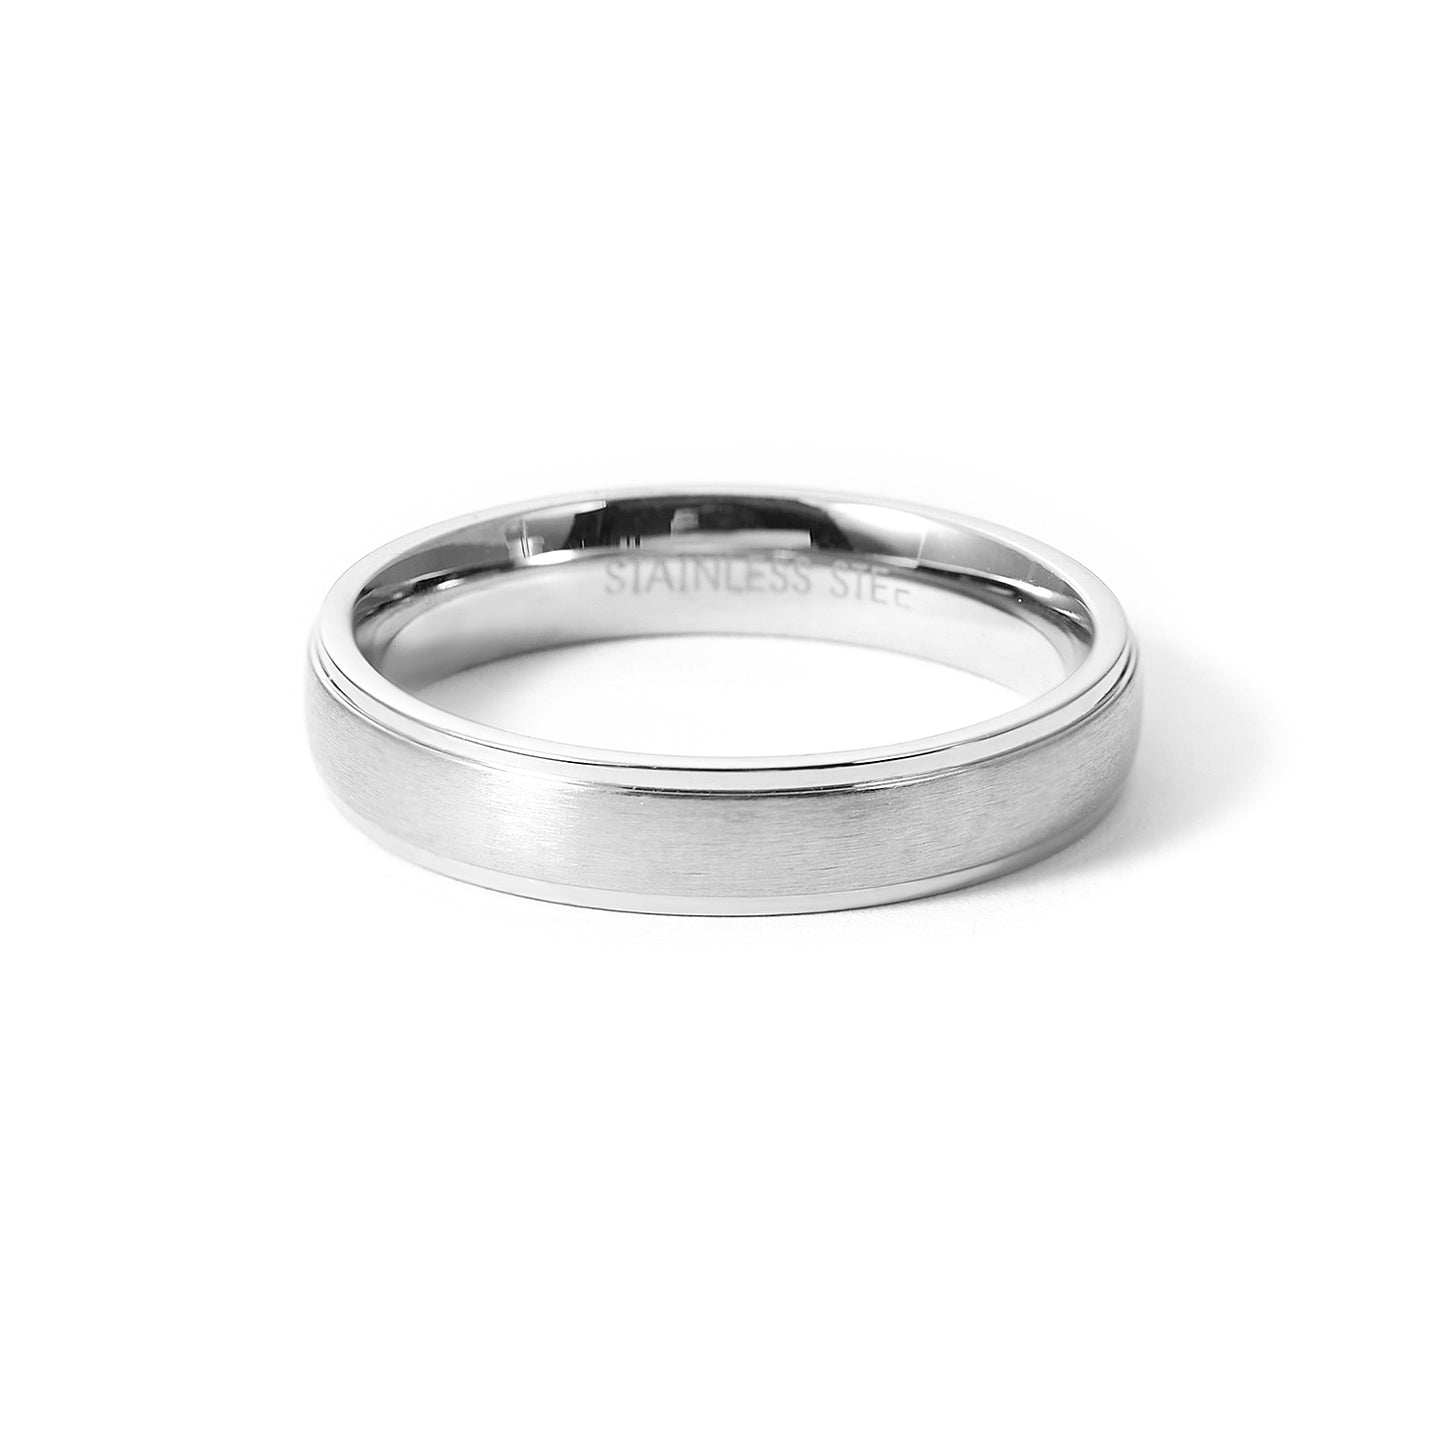 Stainless Steel Brushed Men's Wedding Ring with Polished Beveled Edges